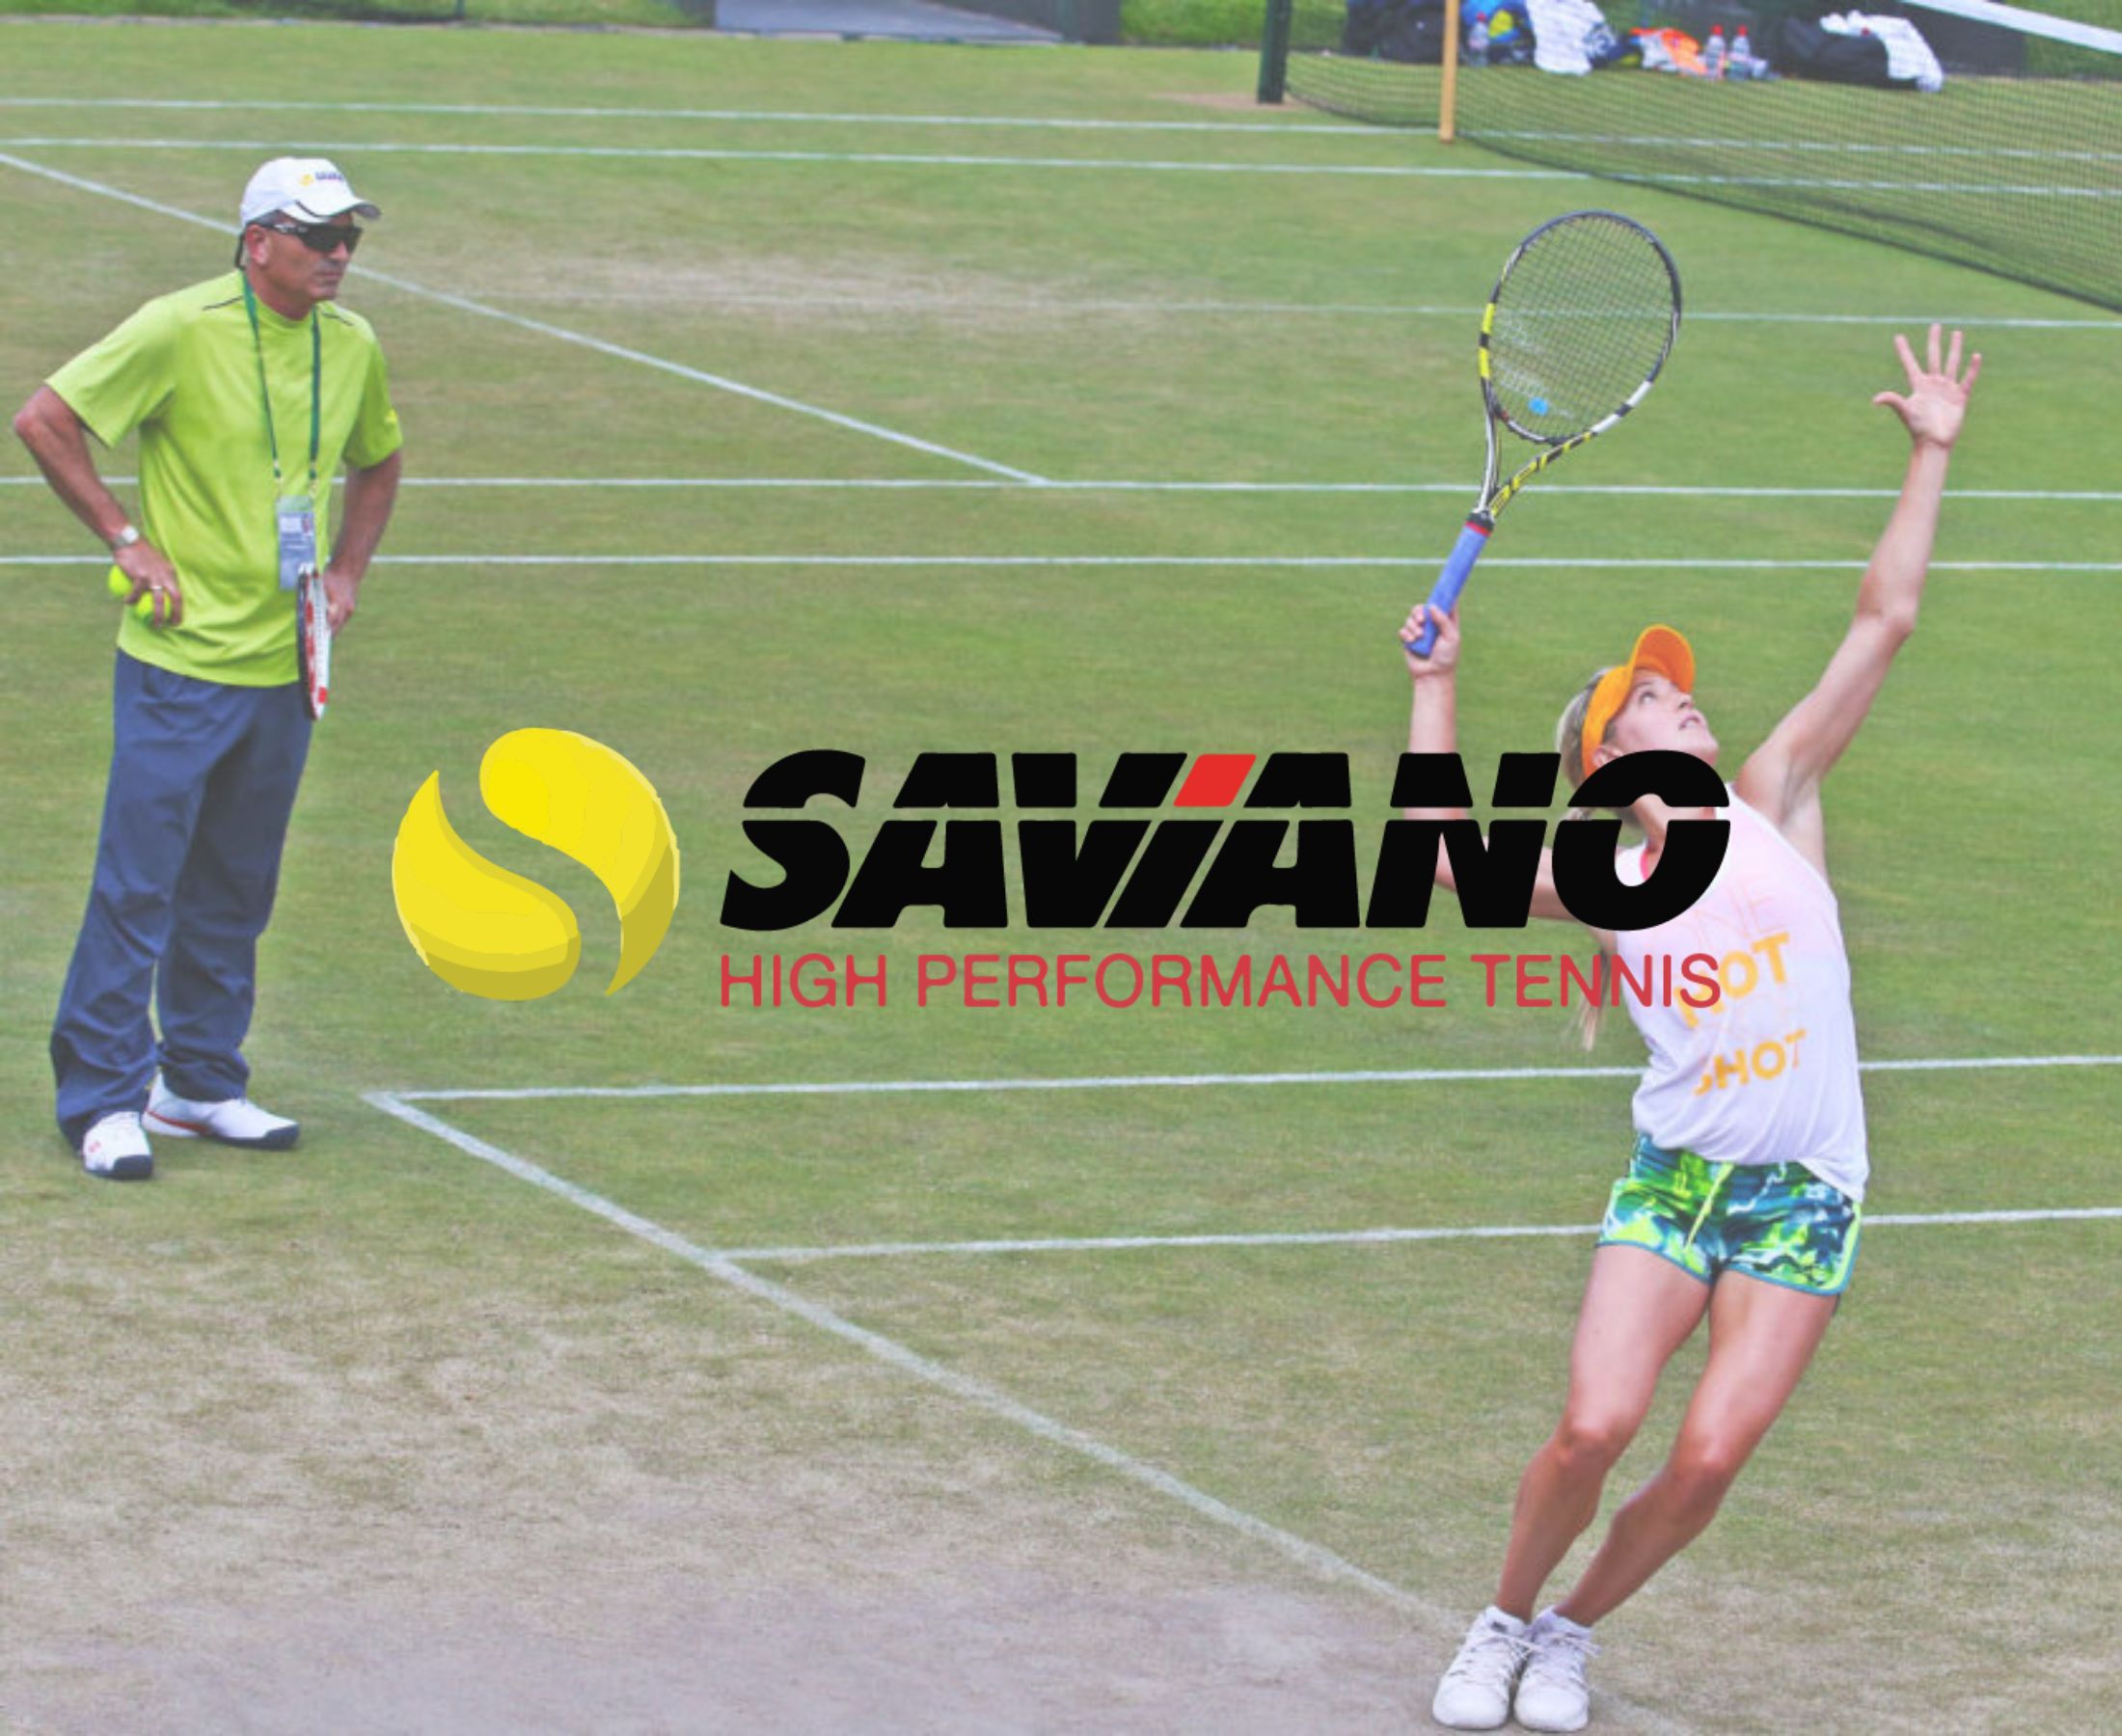 Saviano High Performance Tennis